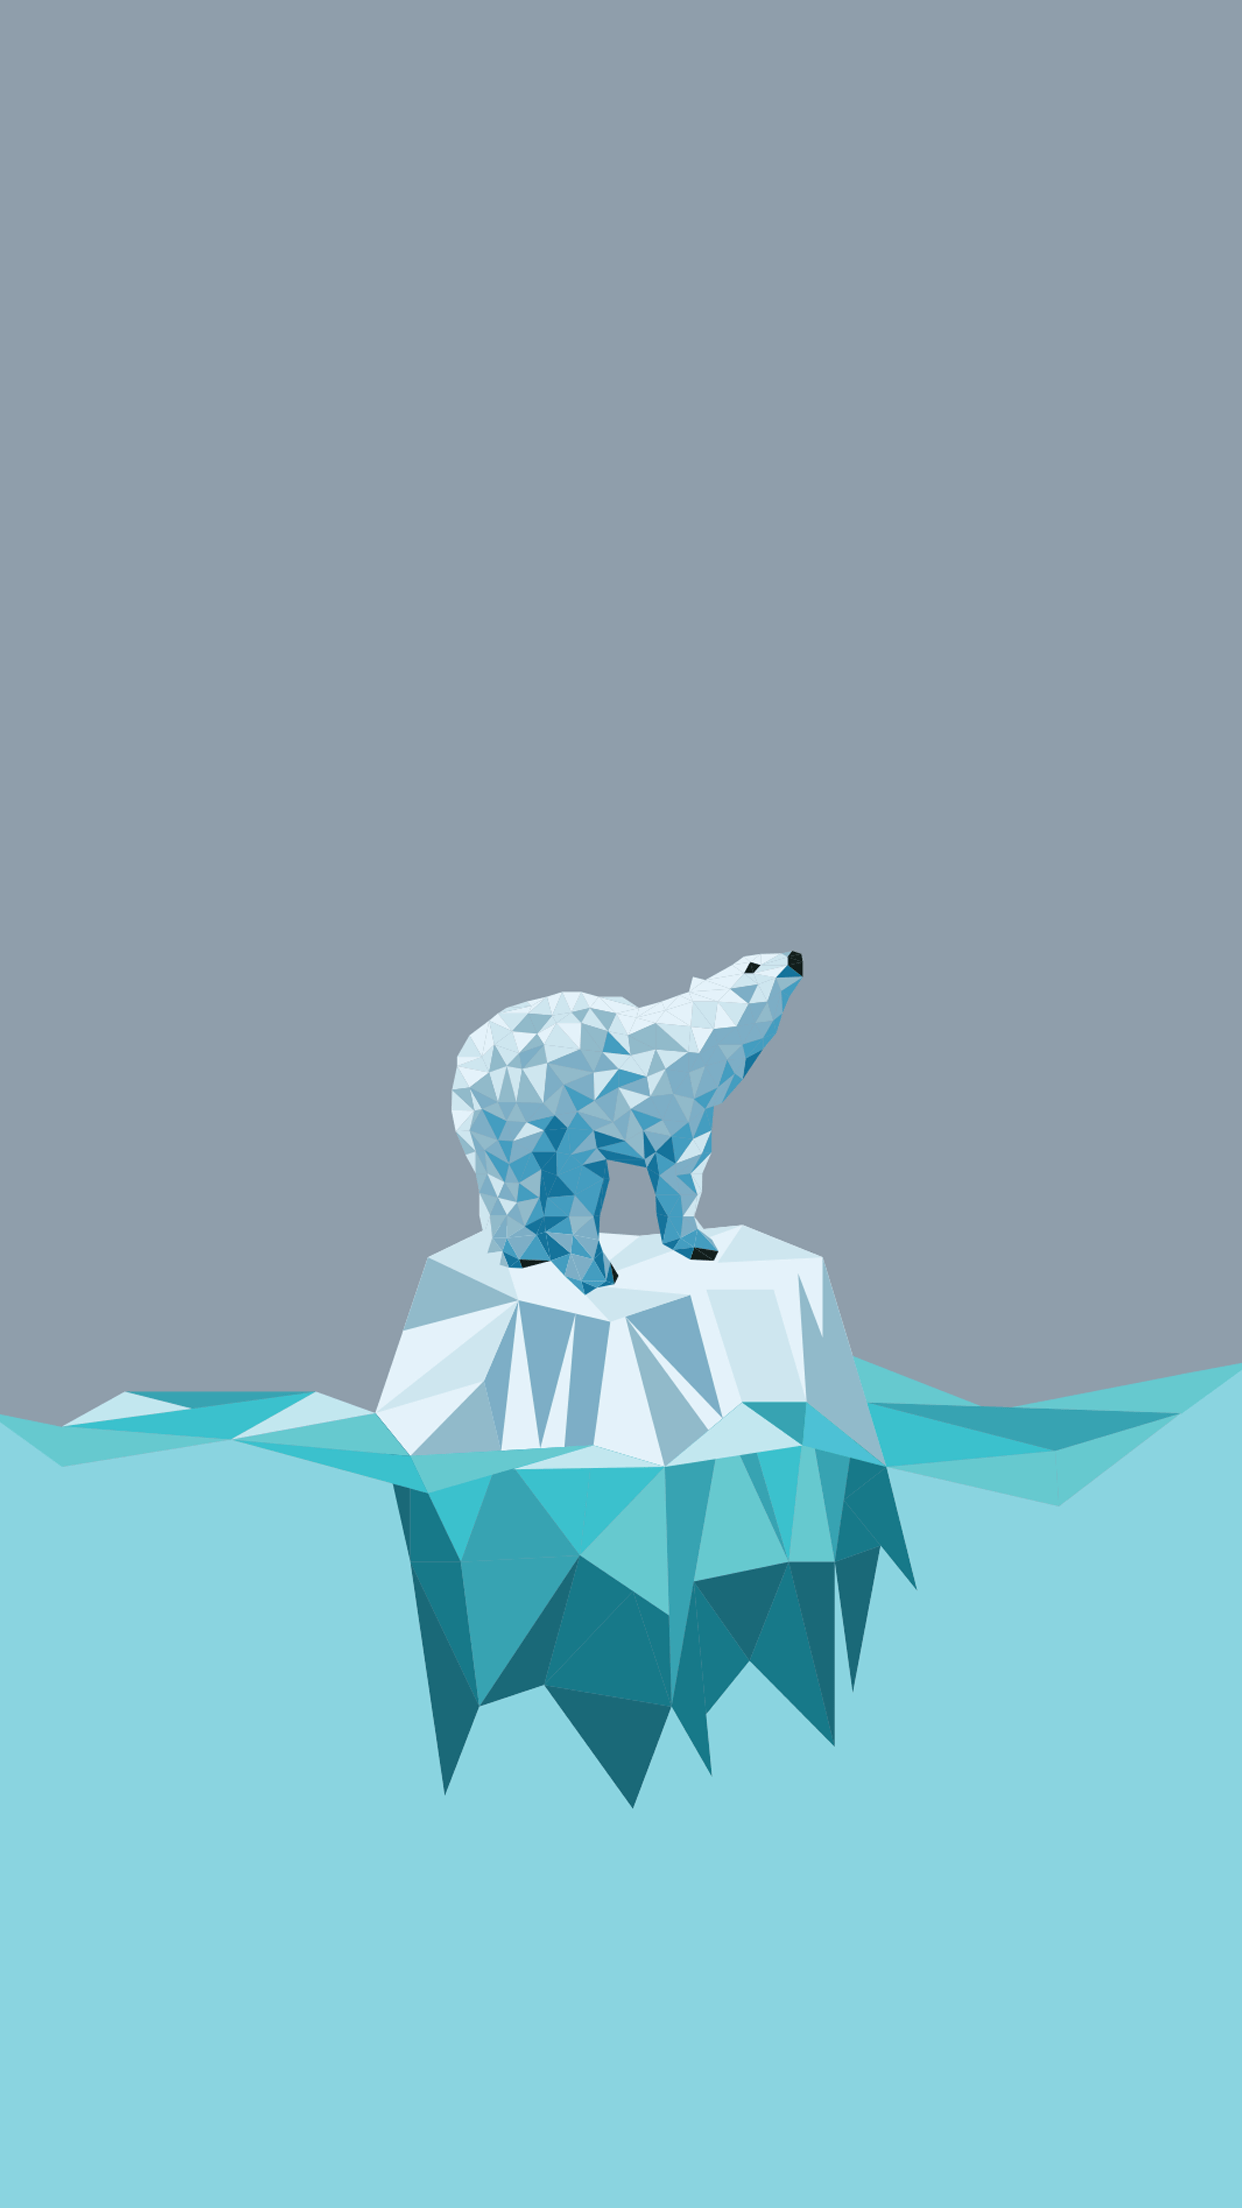 [OC] Made an iPhone wallpaper of our favorite polar bear. How'd I